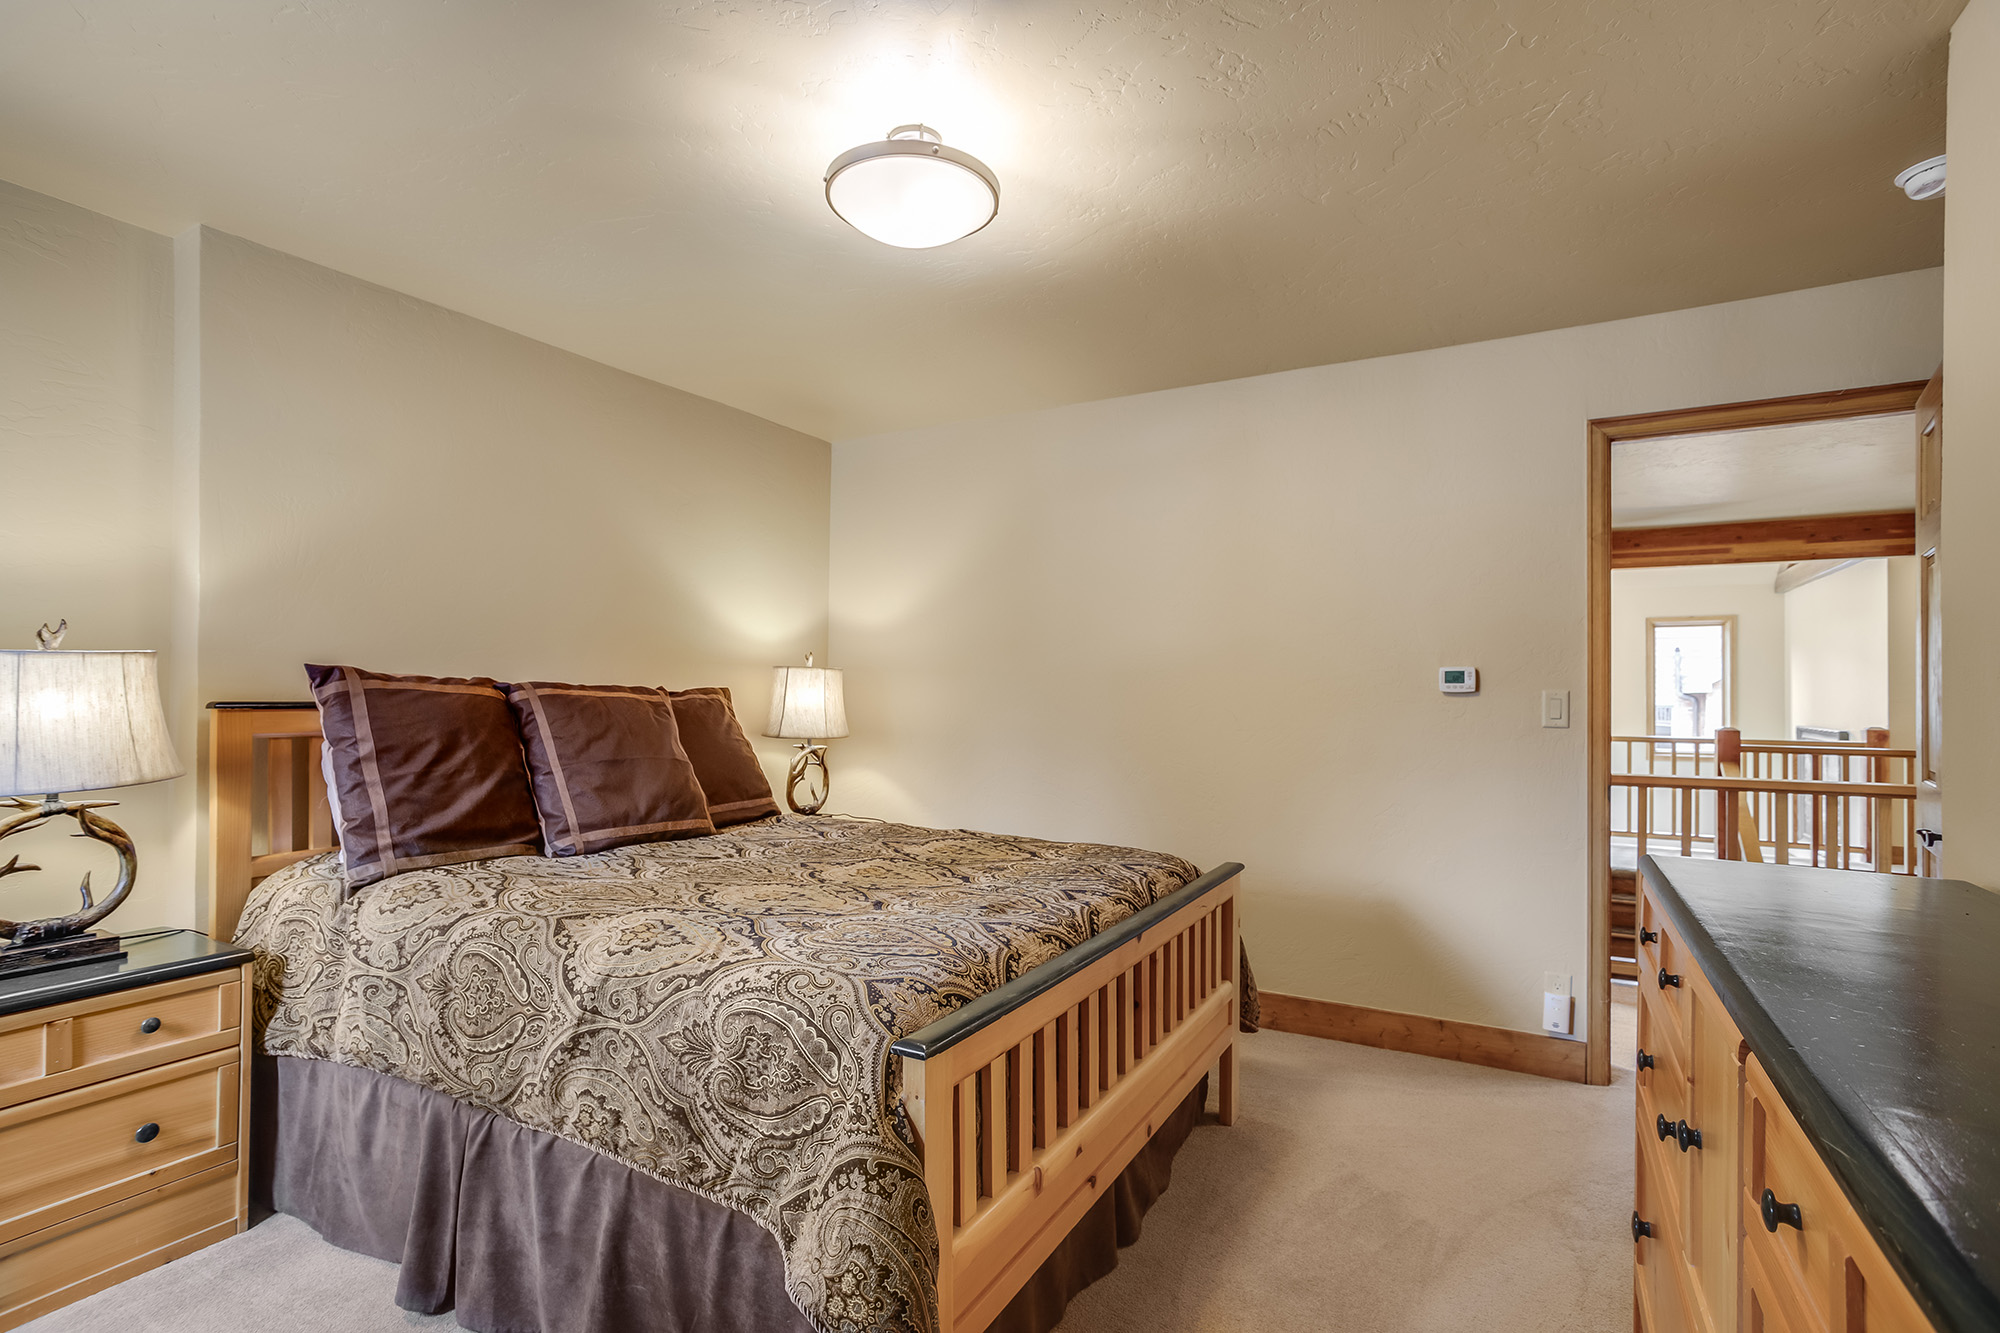 King bedroom -  Friendly Fox Chalet - Breckenridge vacation rental